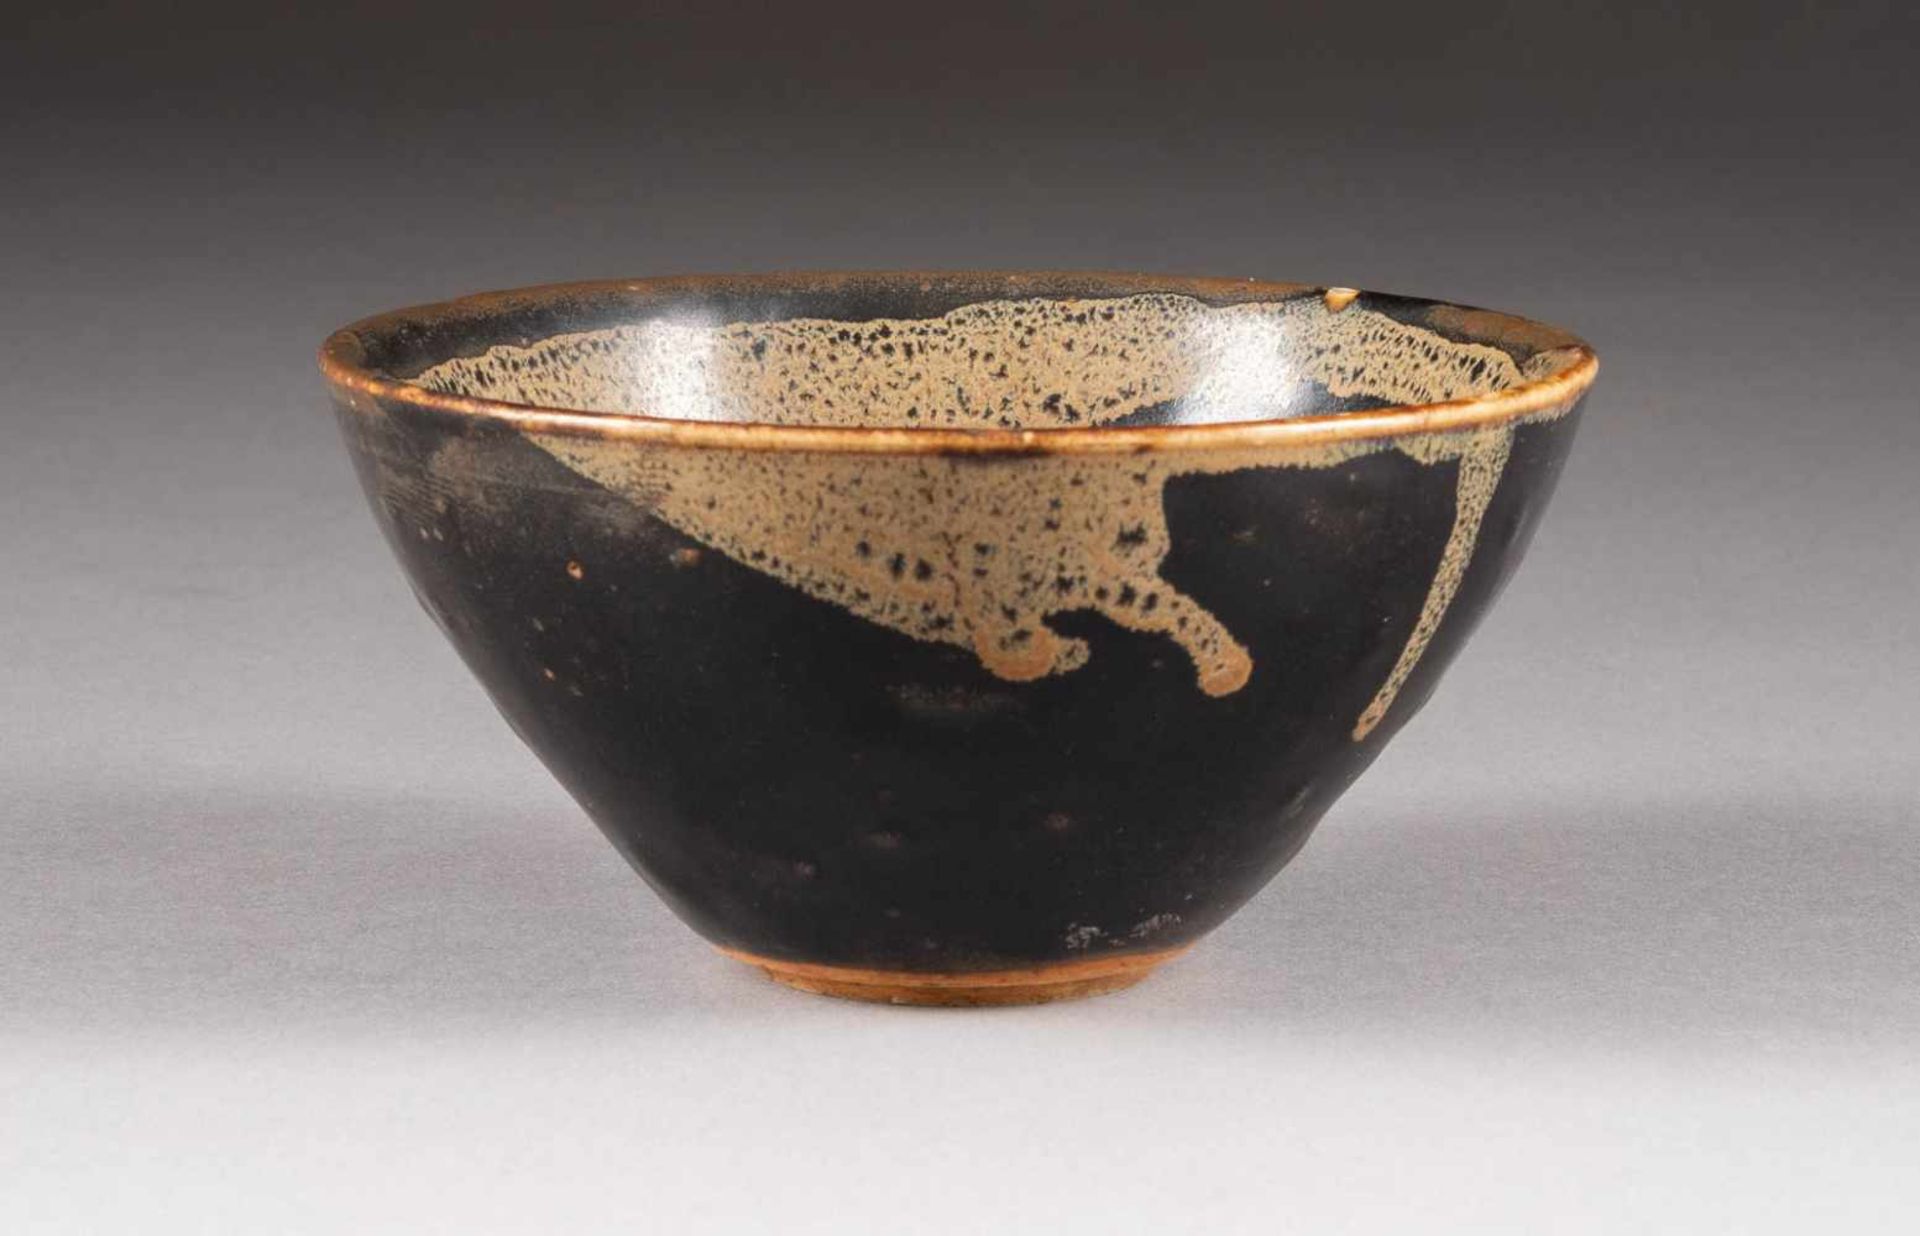 TEESCHALE MIT FABELWESEN Japan/Korea (?), 19. Jh. oder früher Keramik, schwarz-braune Glasur. H. 6,8